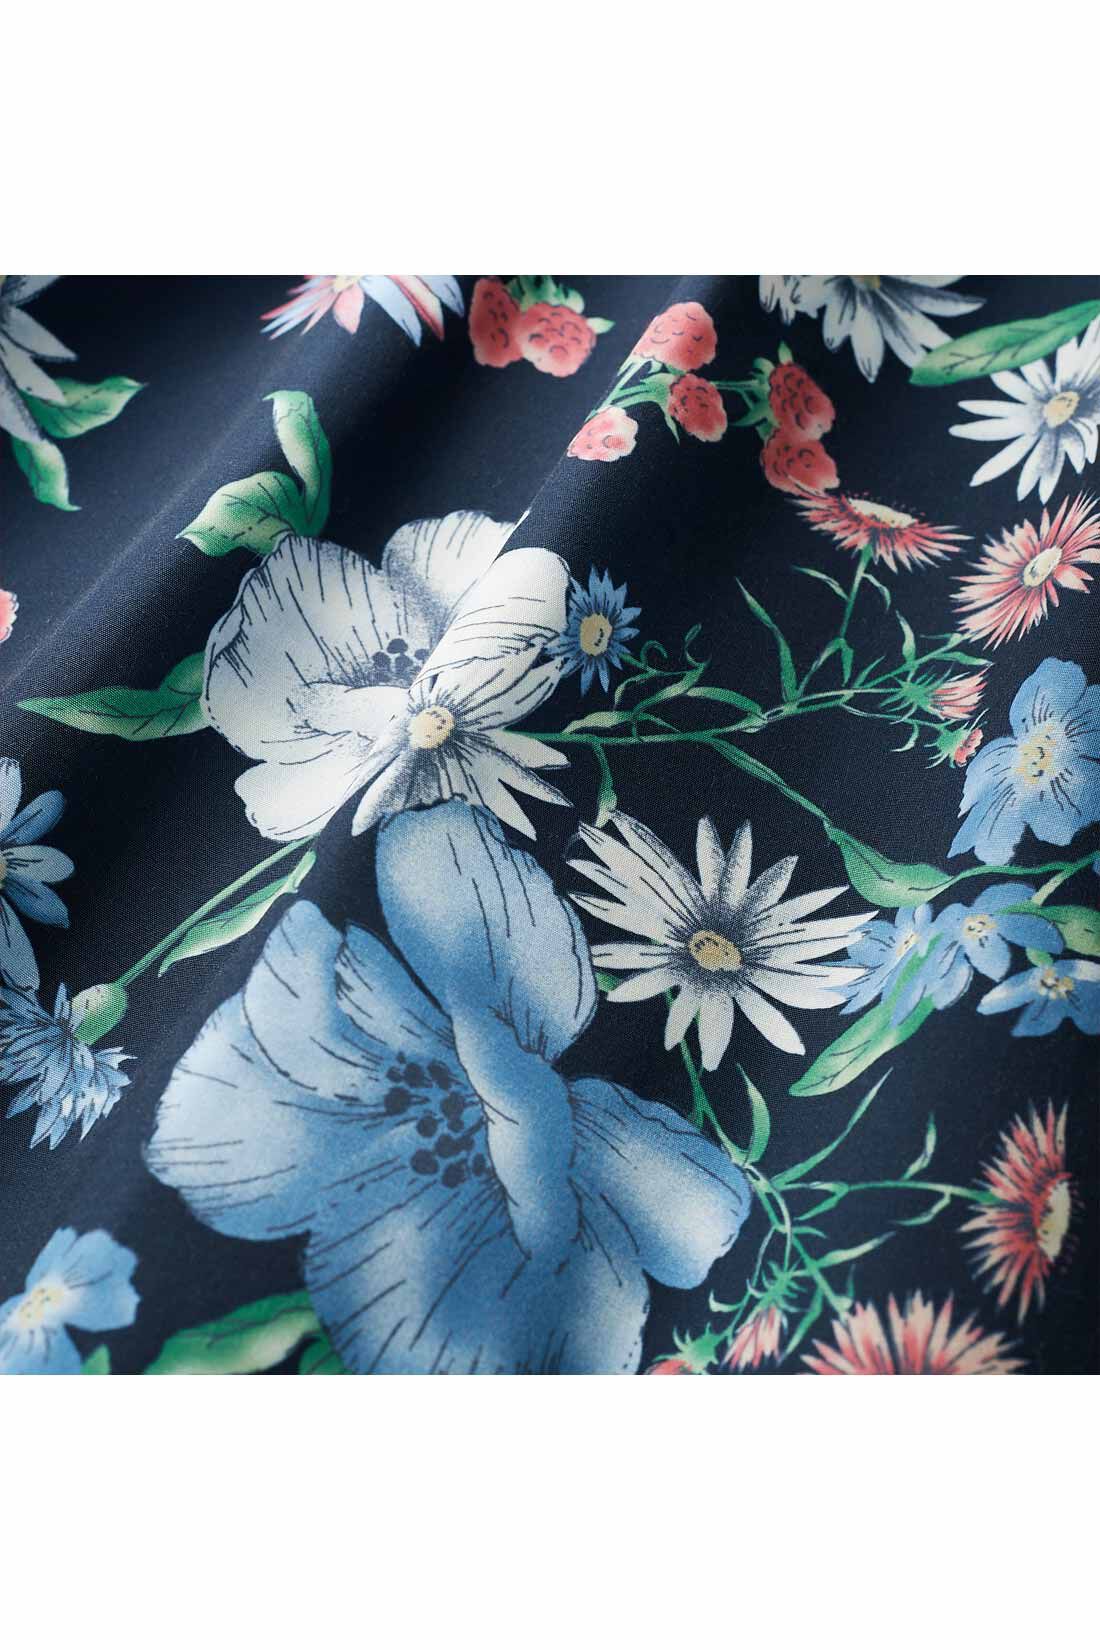 IEDIT[イディット] 華やか柄でコーディネイトが着映えする花柄フレアースカート〈ネイビー〉|ほどよいハリ感のある高密度なきれいめ素材。